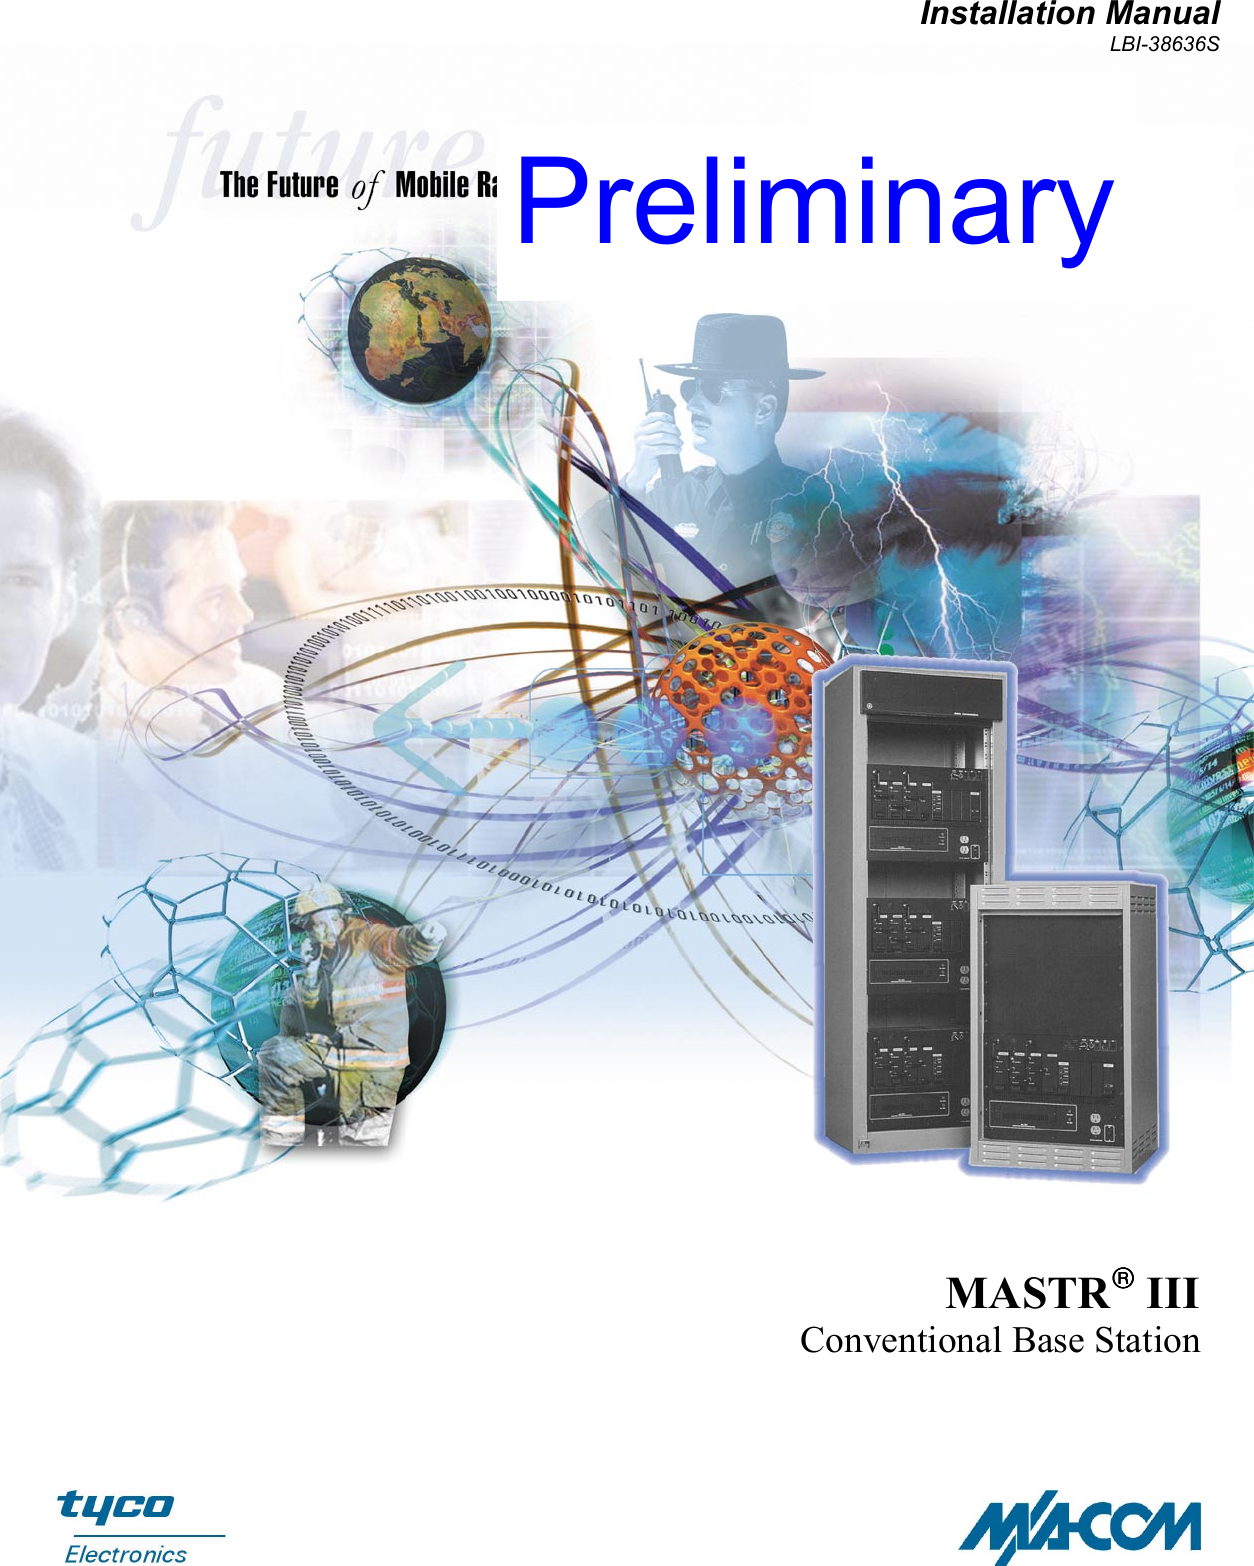 MASTR IIIConventional Base StationInstallation ManualLBI-38636SPreliminary